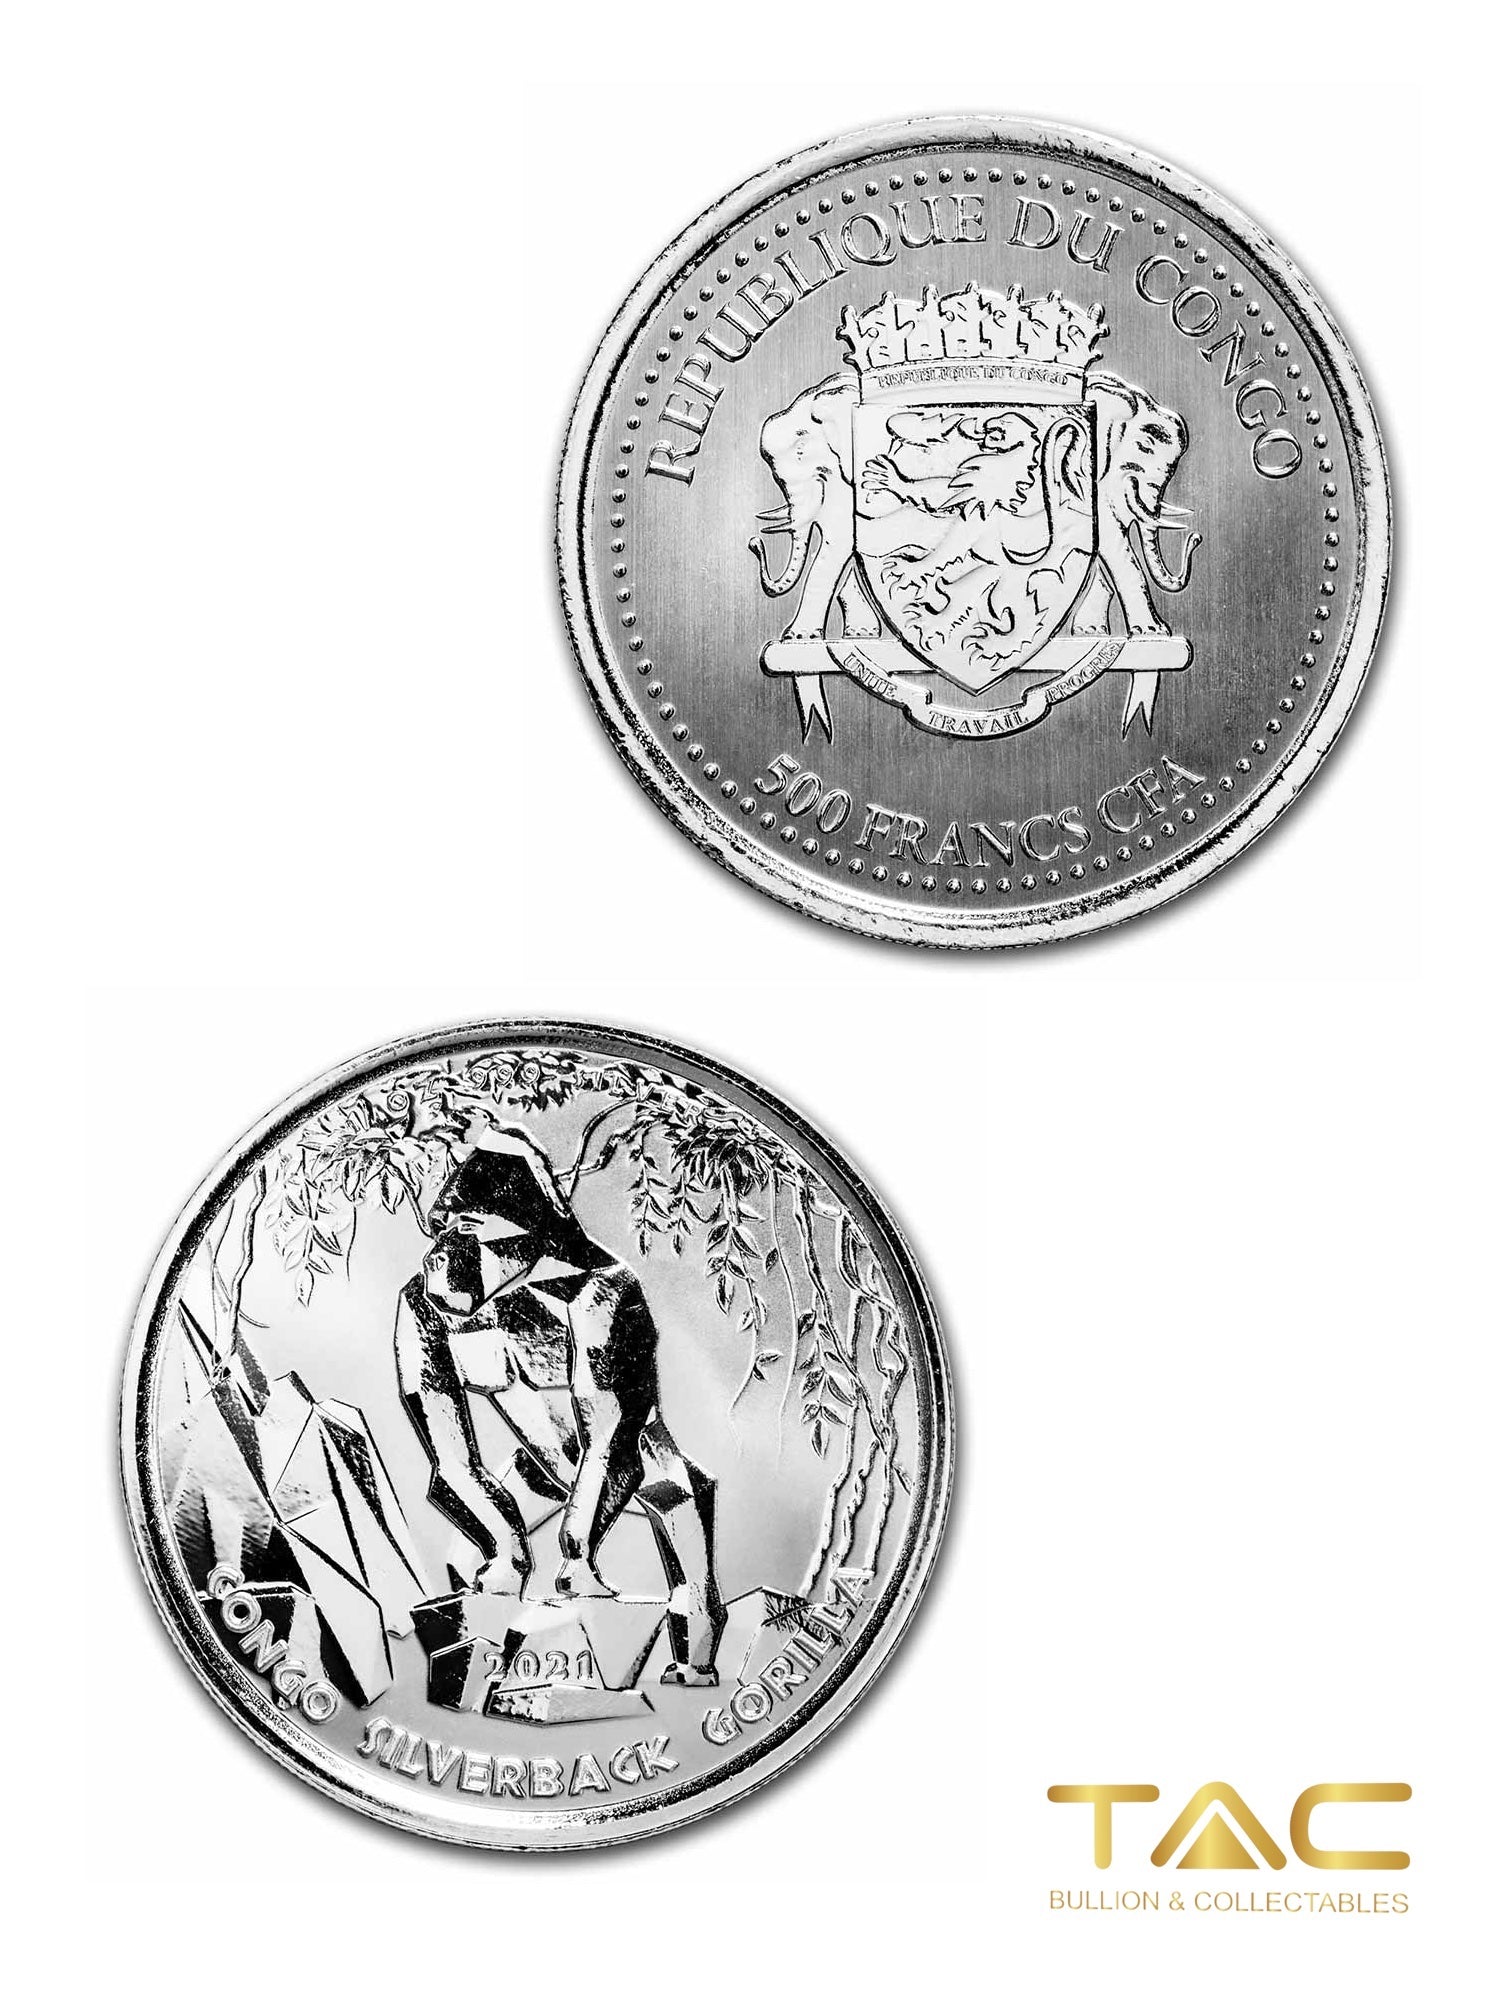 1 oz Silver Coin - 2021 Silverback - Republic of Congo - Scottsdale Mint